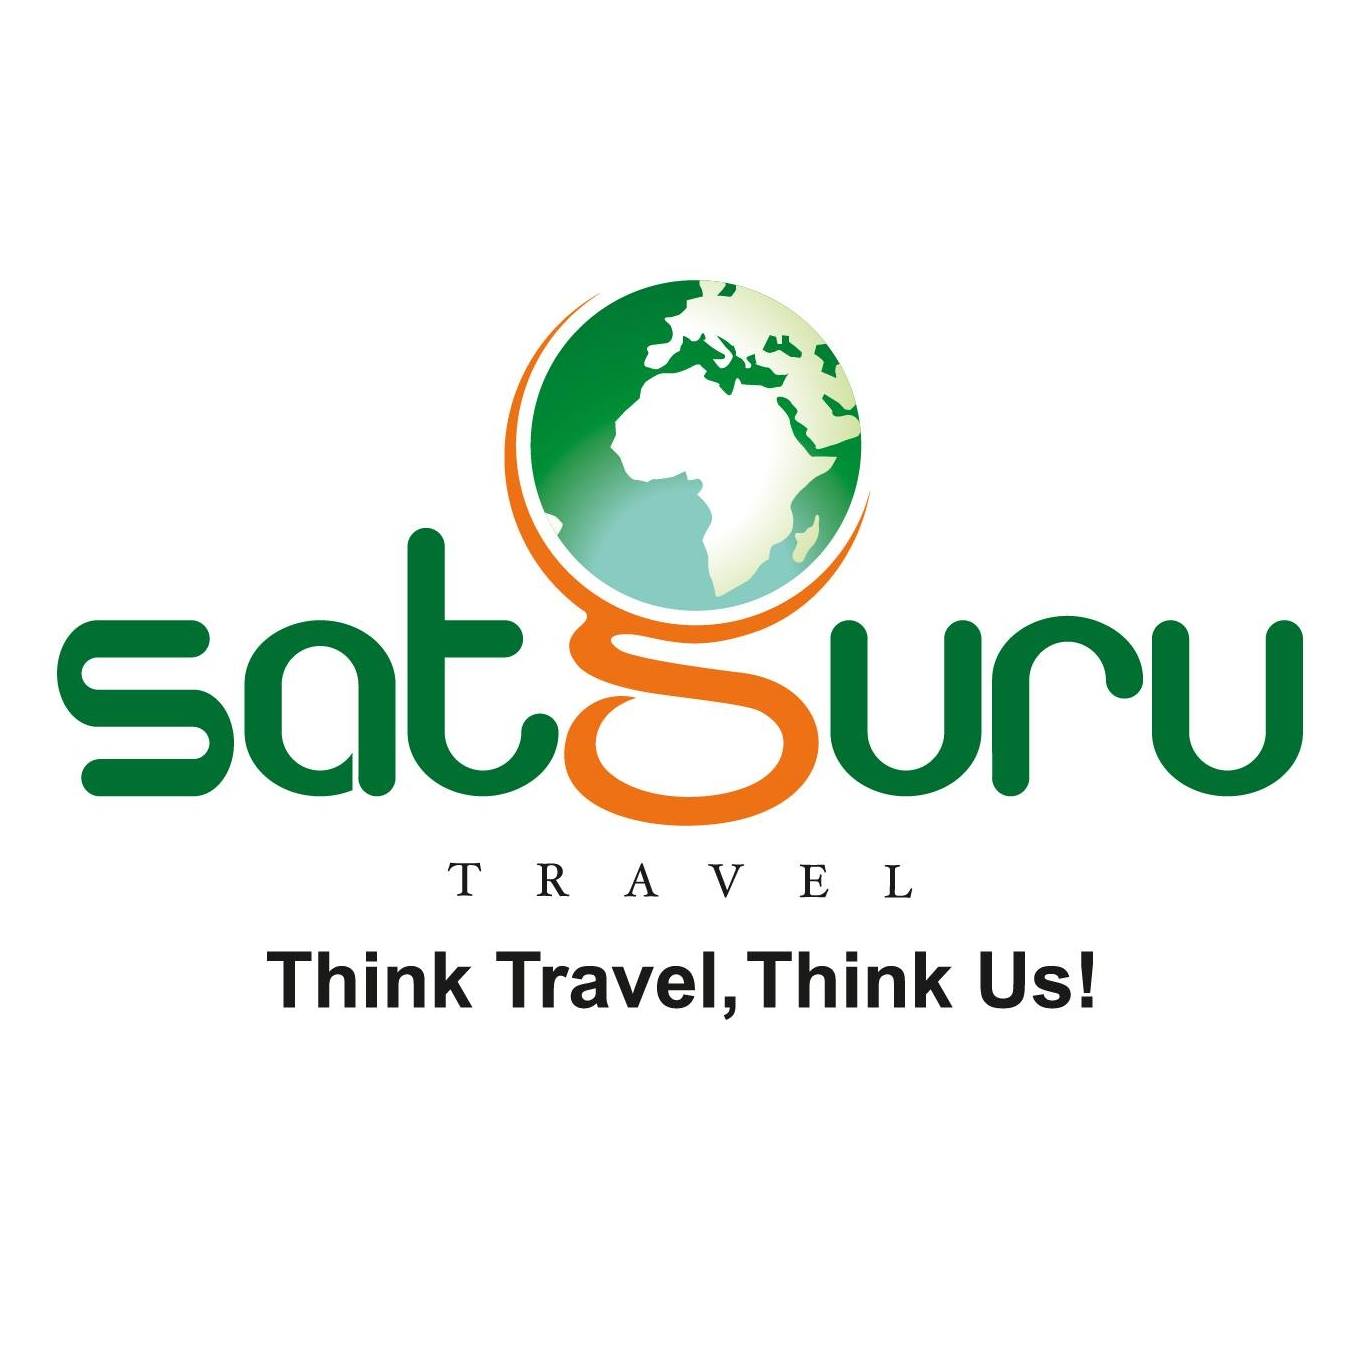 Satguru Travel currently